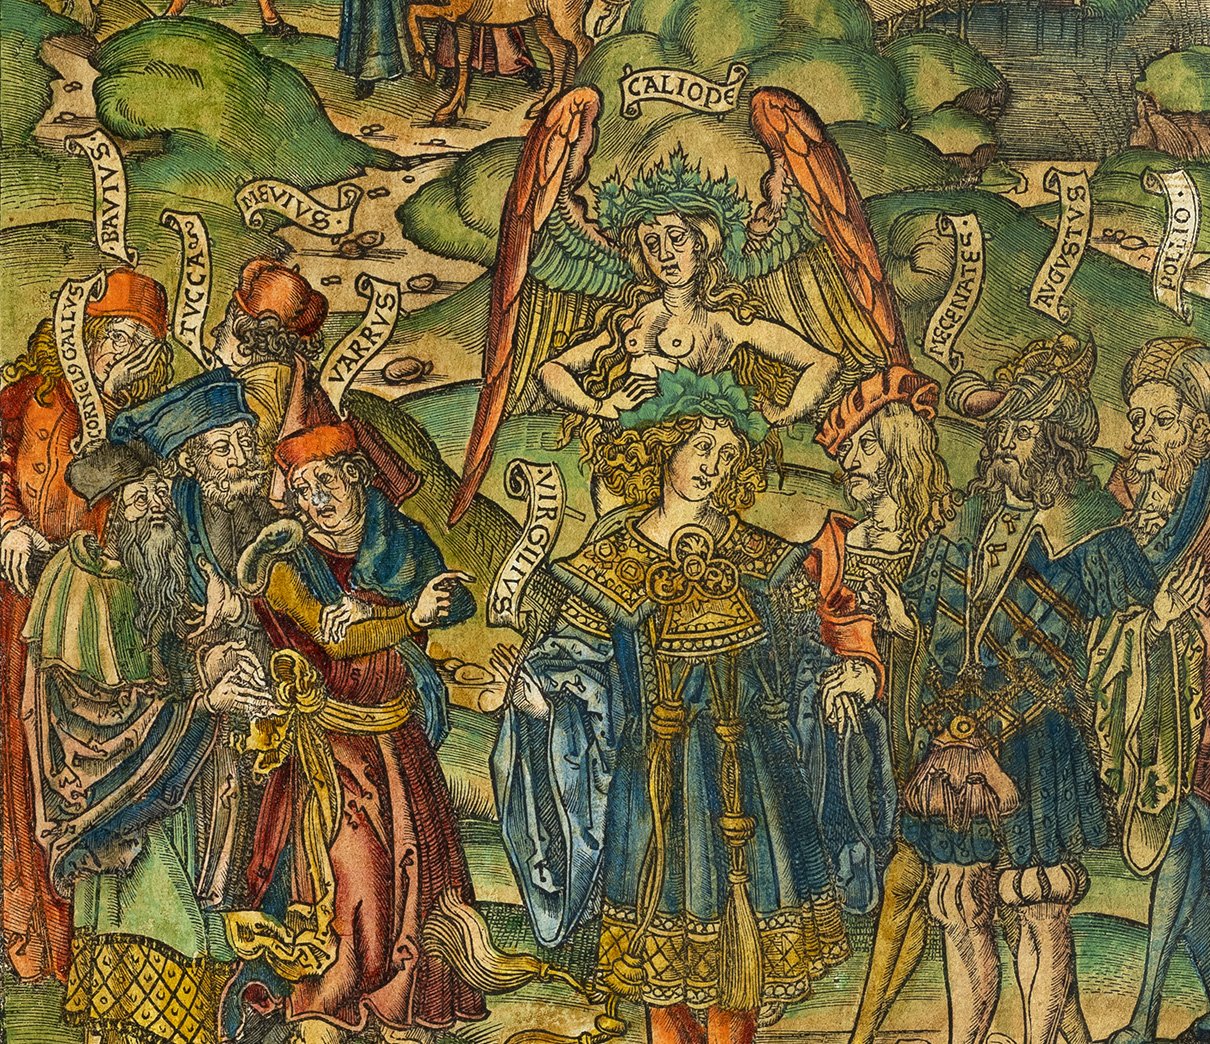 vergil-opera-1517-lyon-hand-coloured-woodcuts-for-sale-2-detail.jpg